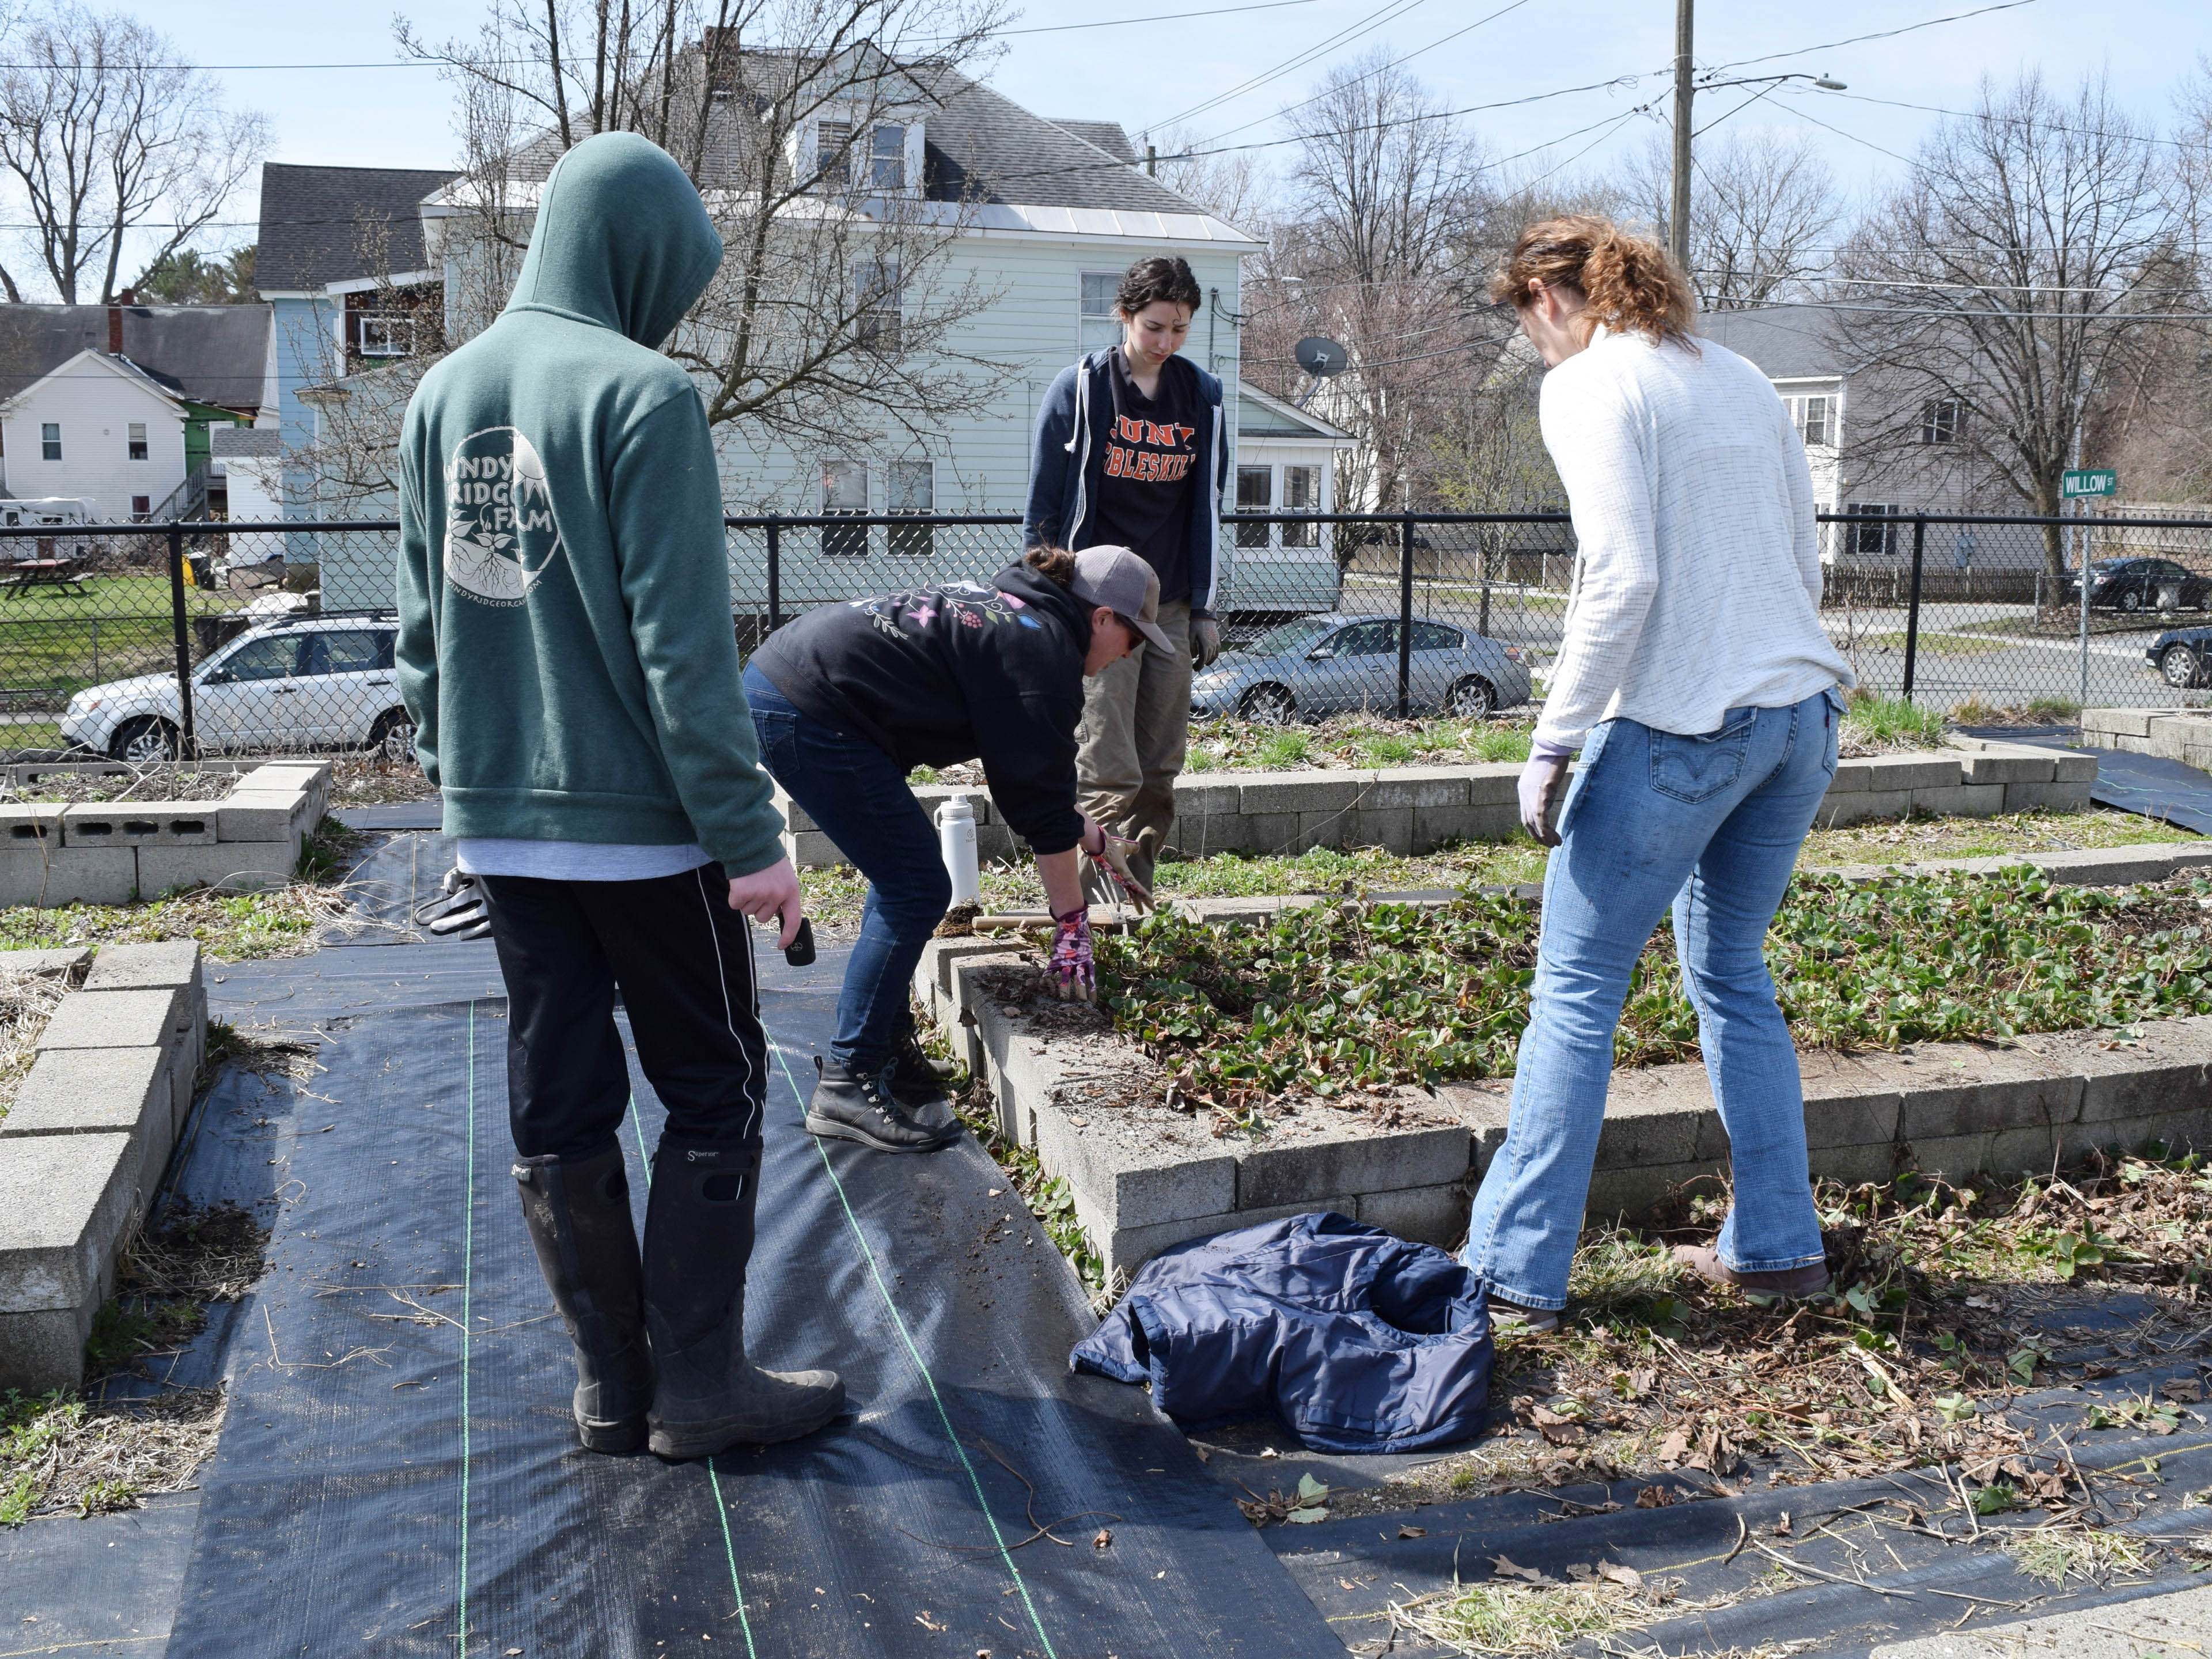 City gardener Julia Lemieux offers gardening instruction to some volunteers